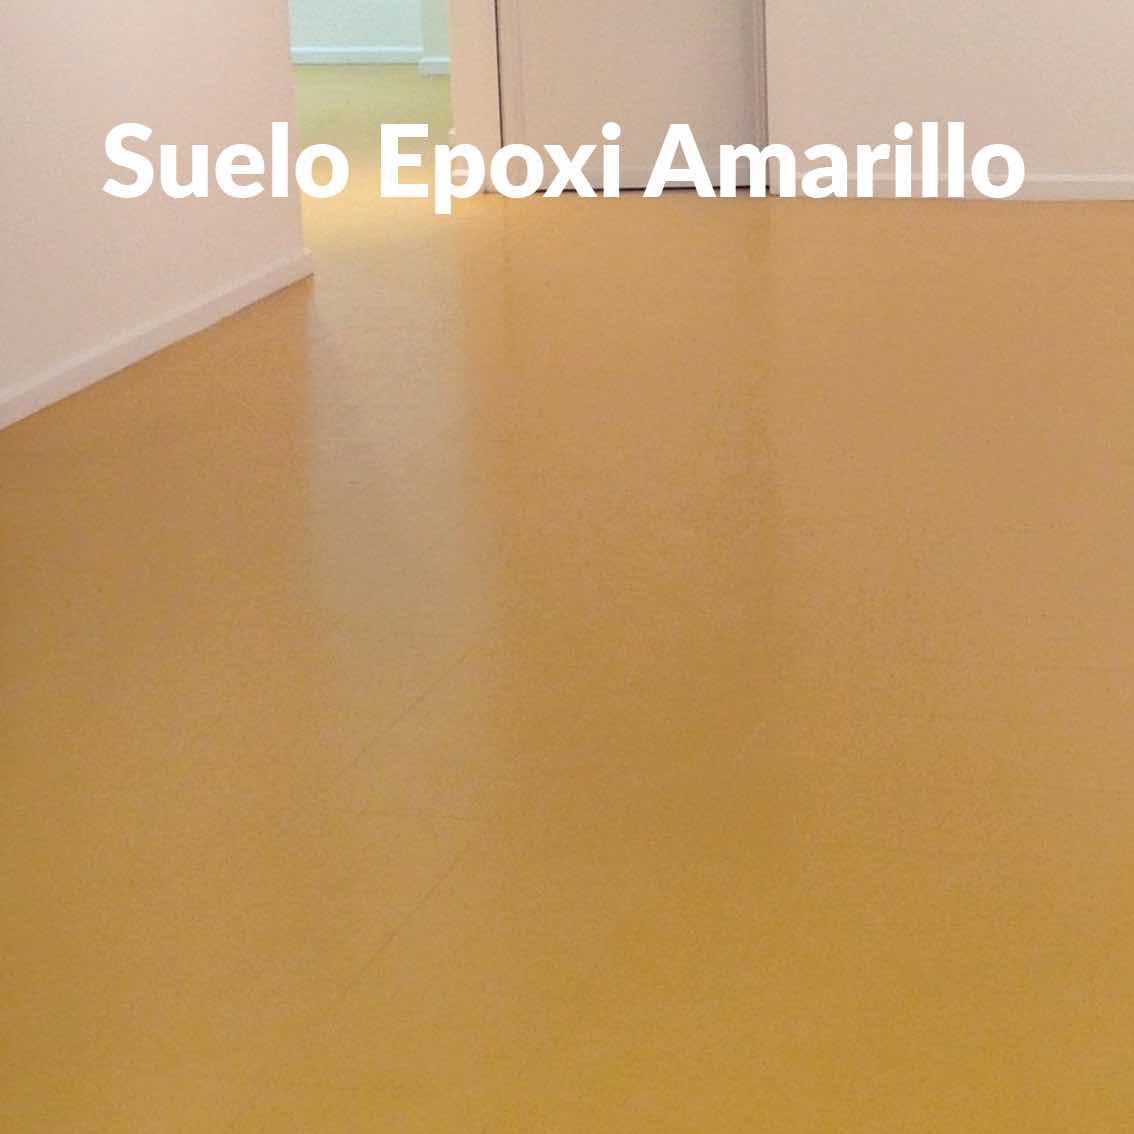 Suelo-Epoxi-Amarillo